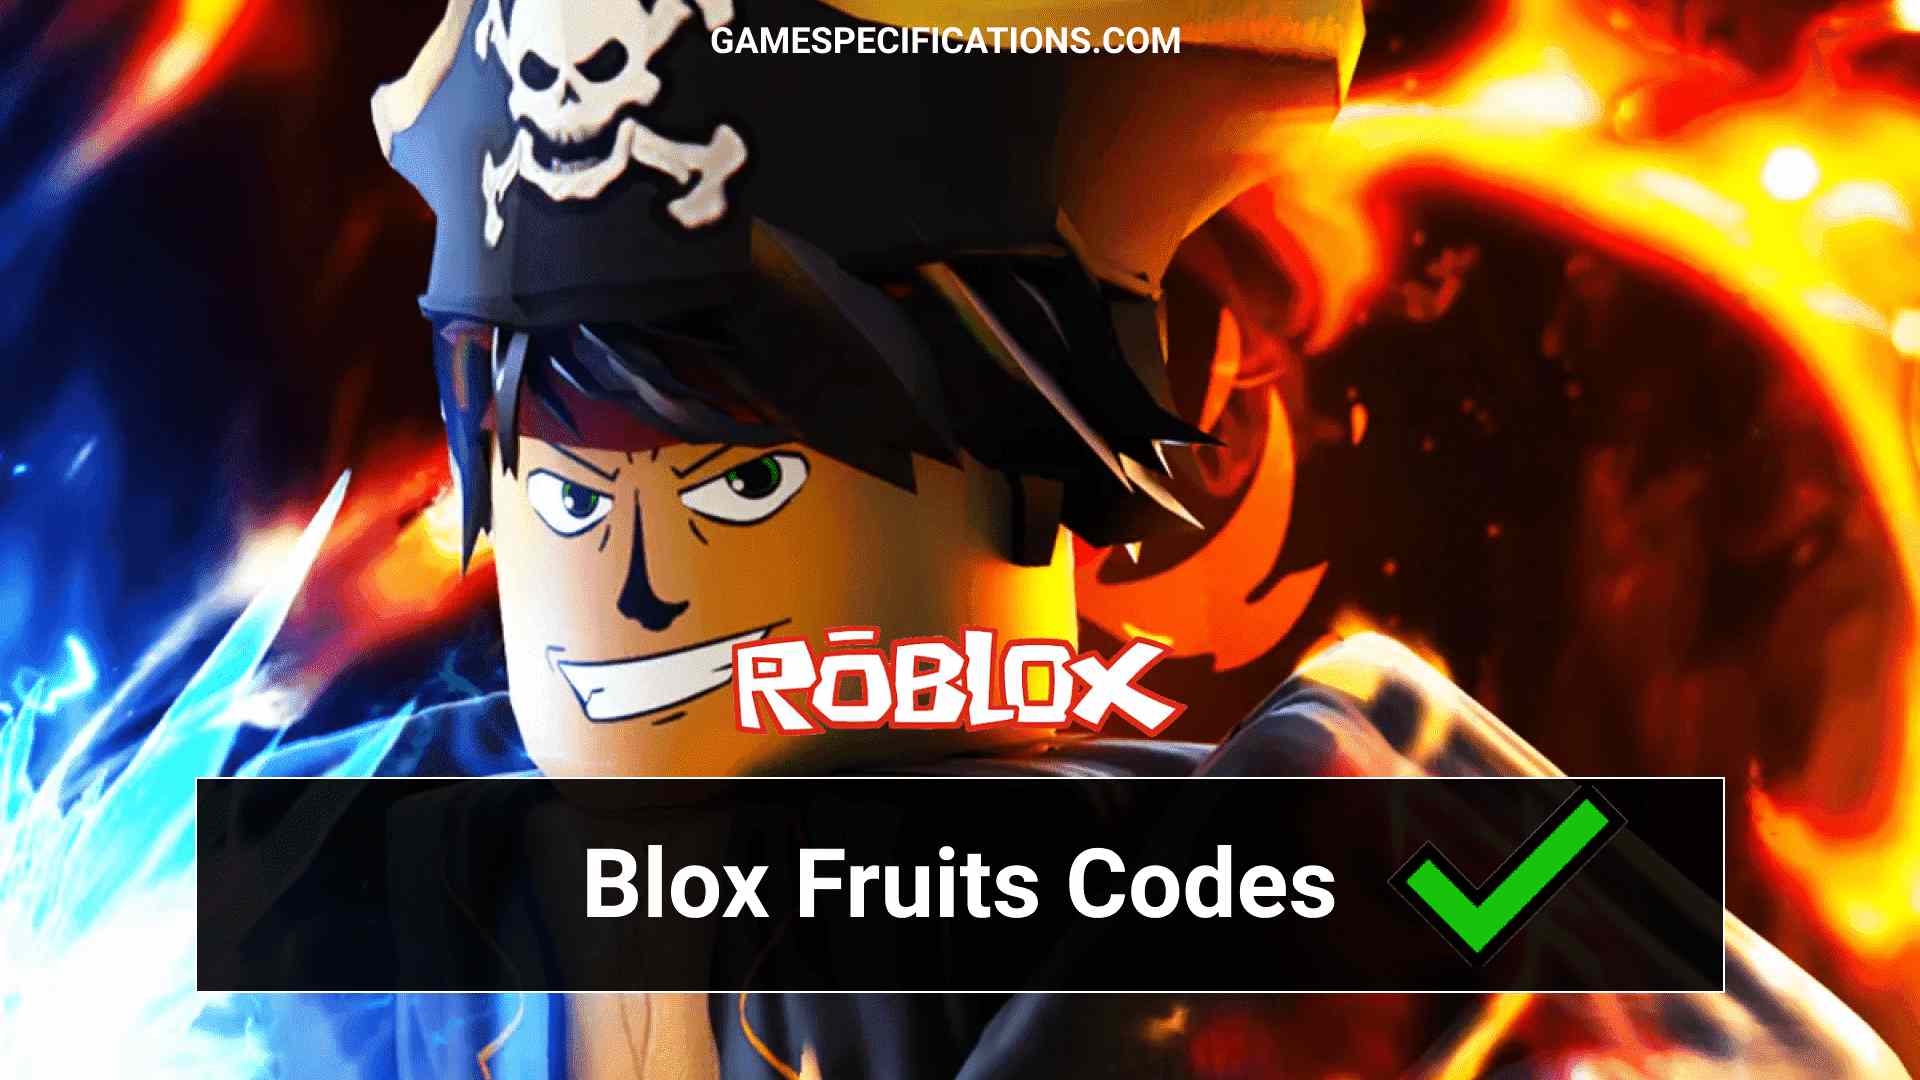 Blox link. BLOX Fruits. BLOX Fruit code. Roblox BLOX Fruits. Коды BLOX Fruits РОБЛОКС.